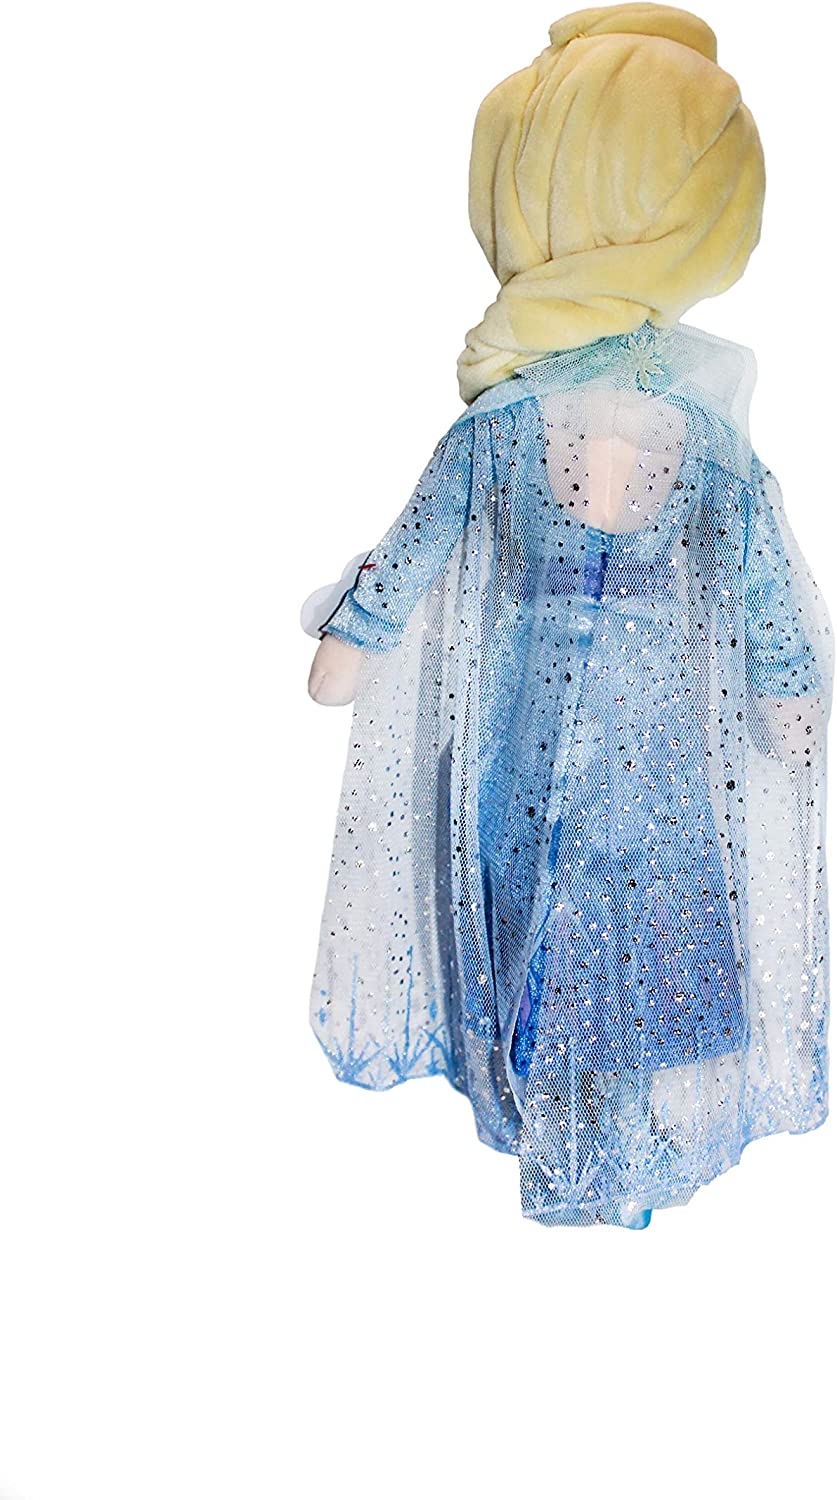 TY T02406 Frozen 2-Disney Princess Queen ELSA W/Sound-Beanie-MED, Multicolored